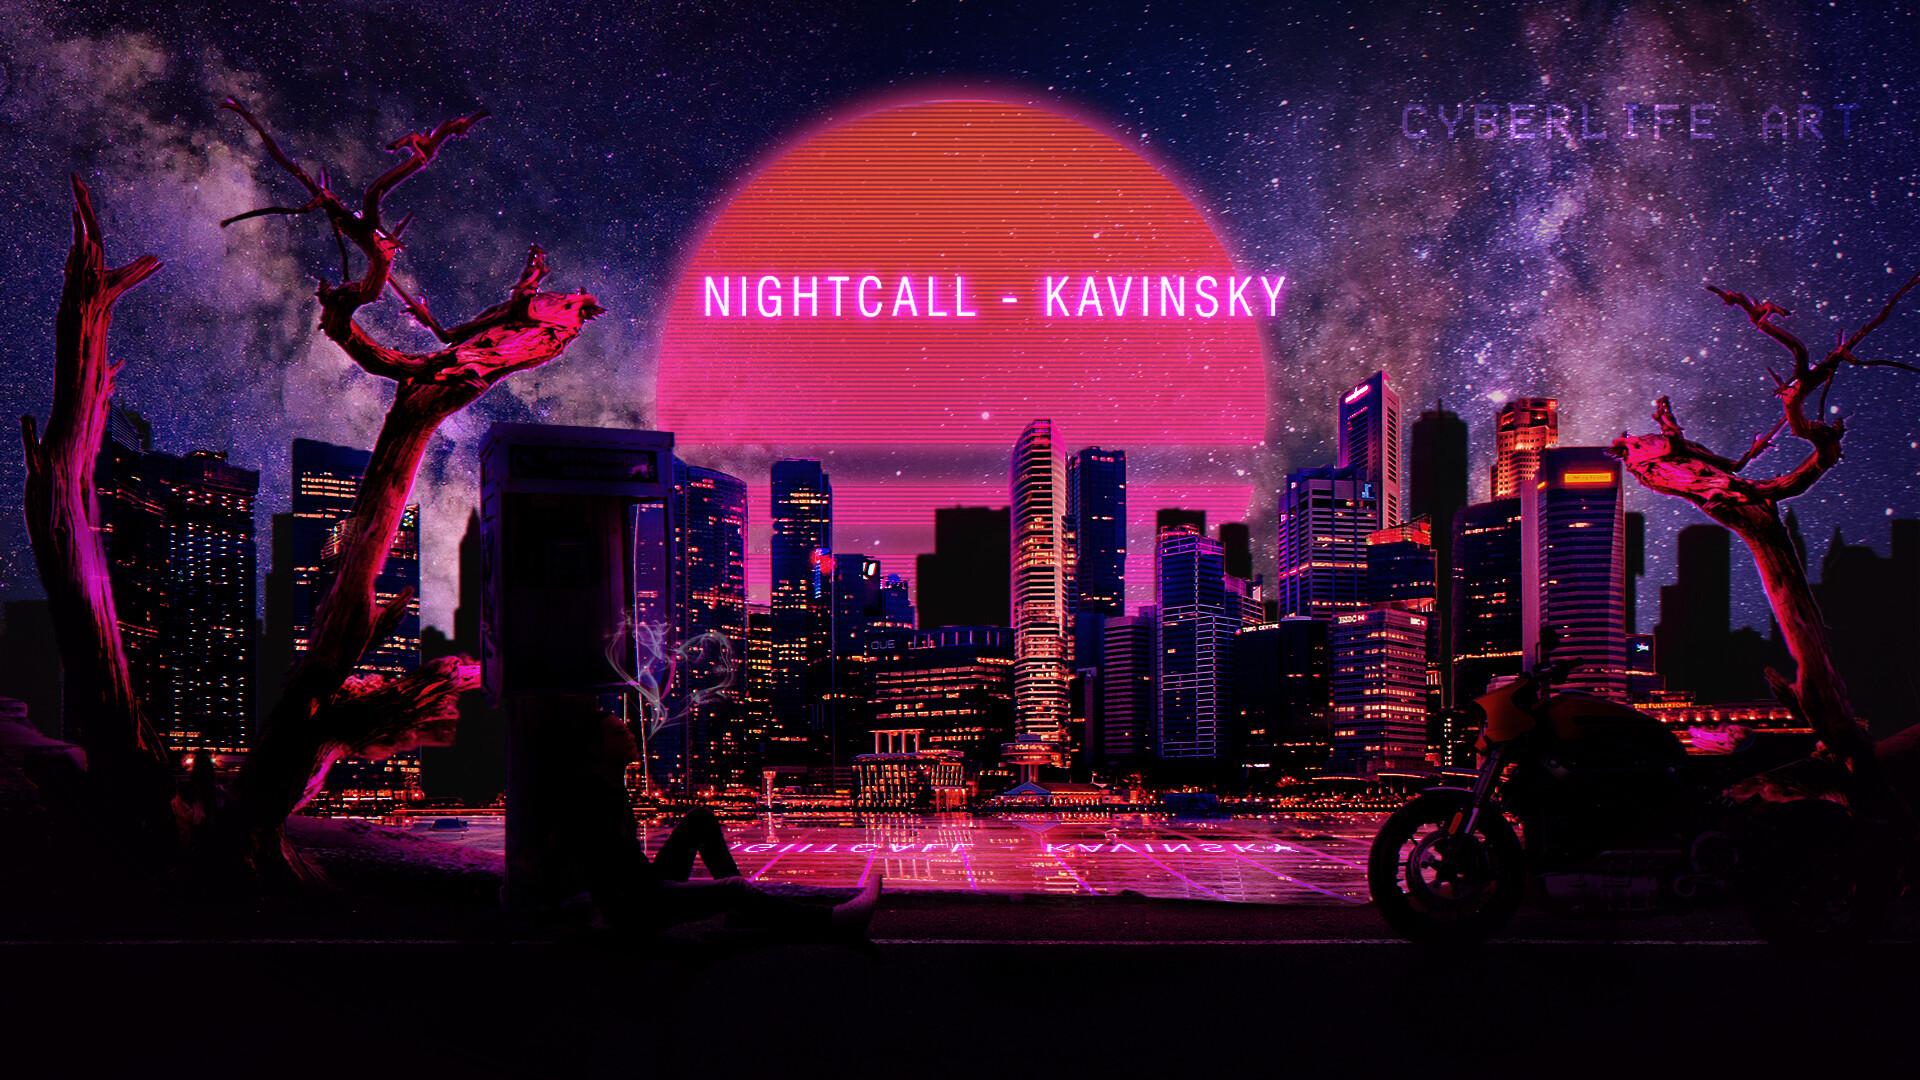 NIGHT CALLS